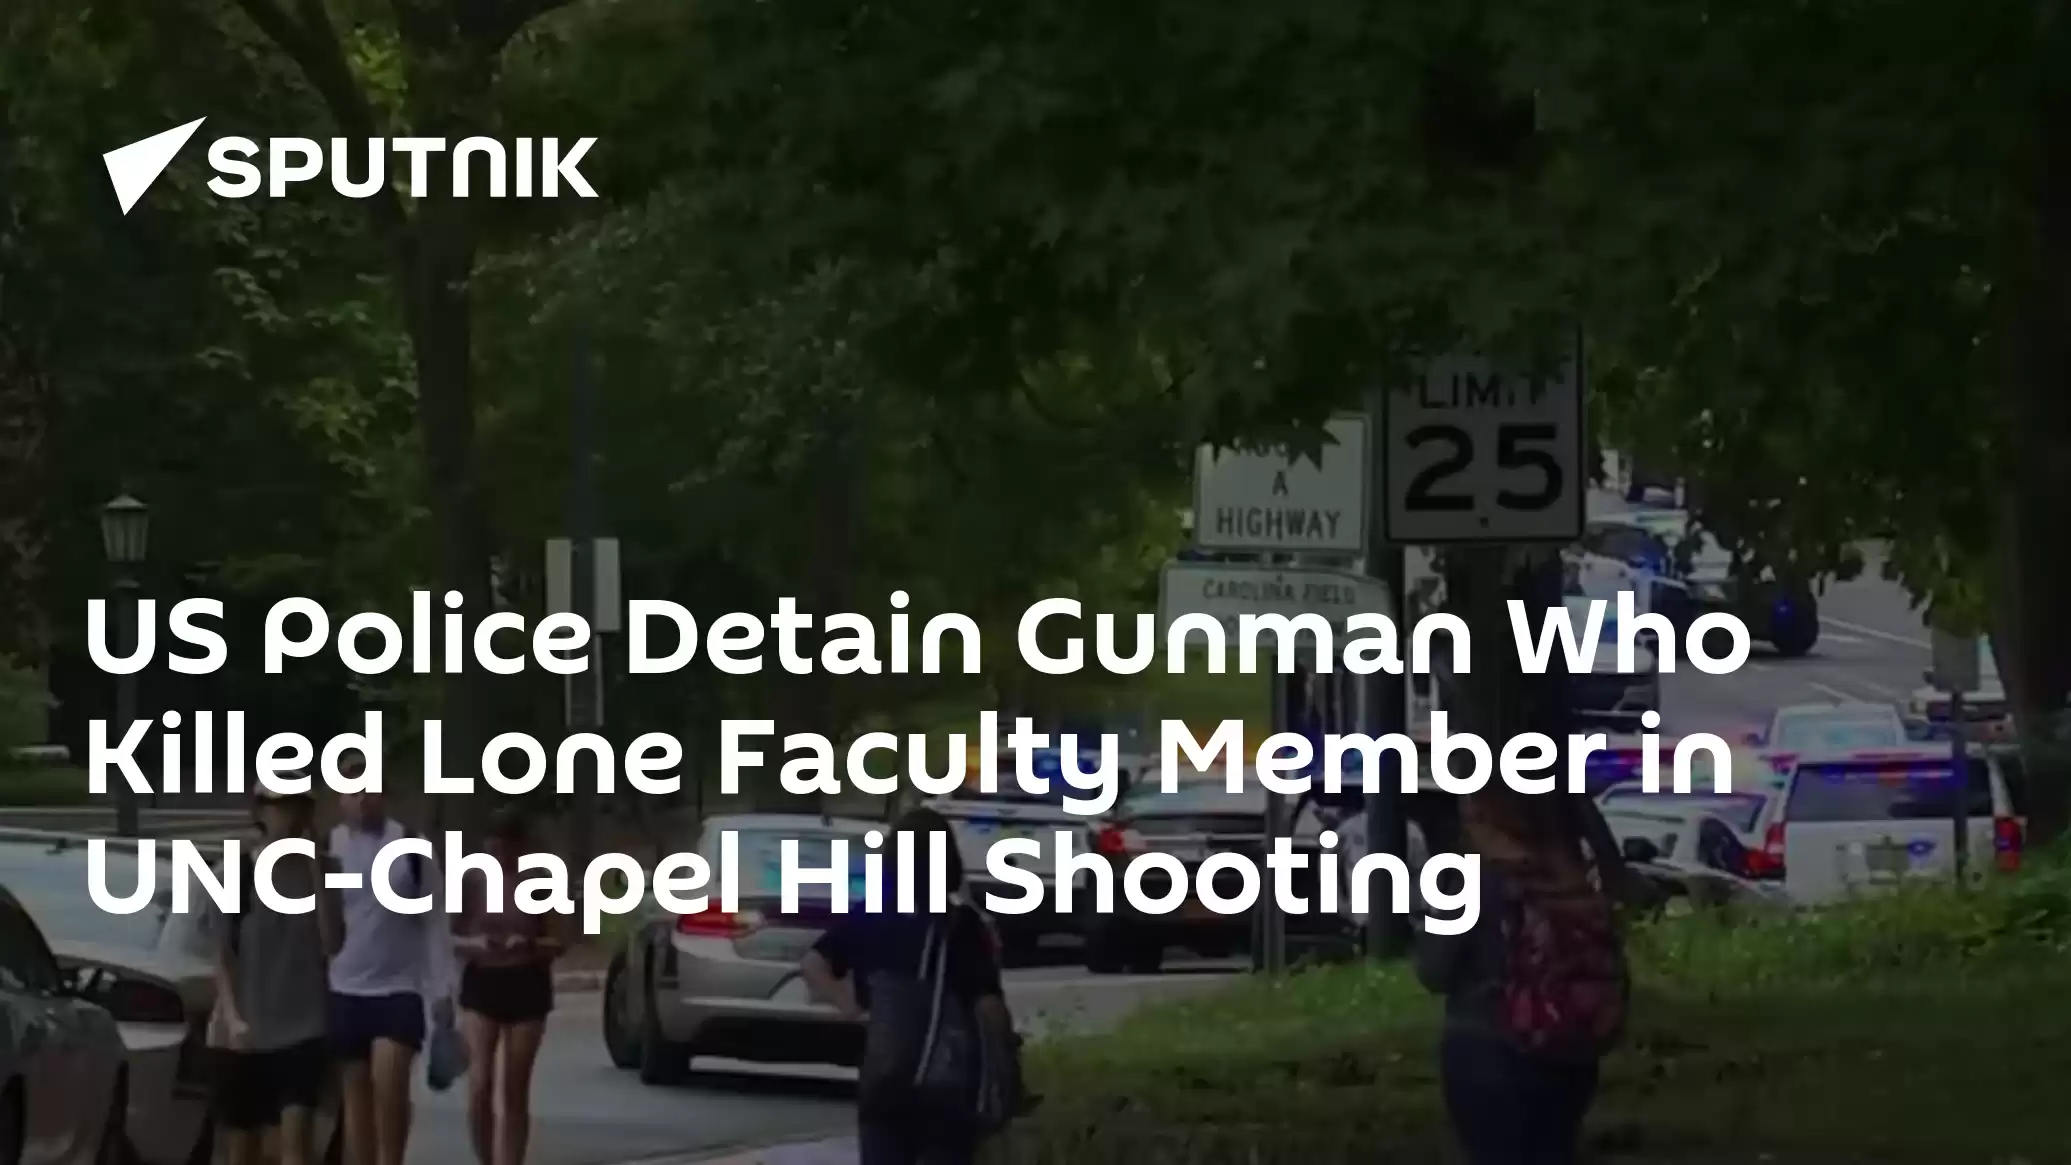 US Police Detain Gunman in UNC-Chapel Hill Shooting